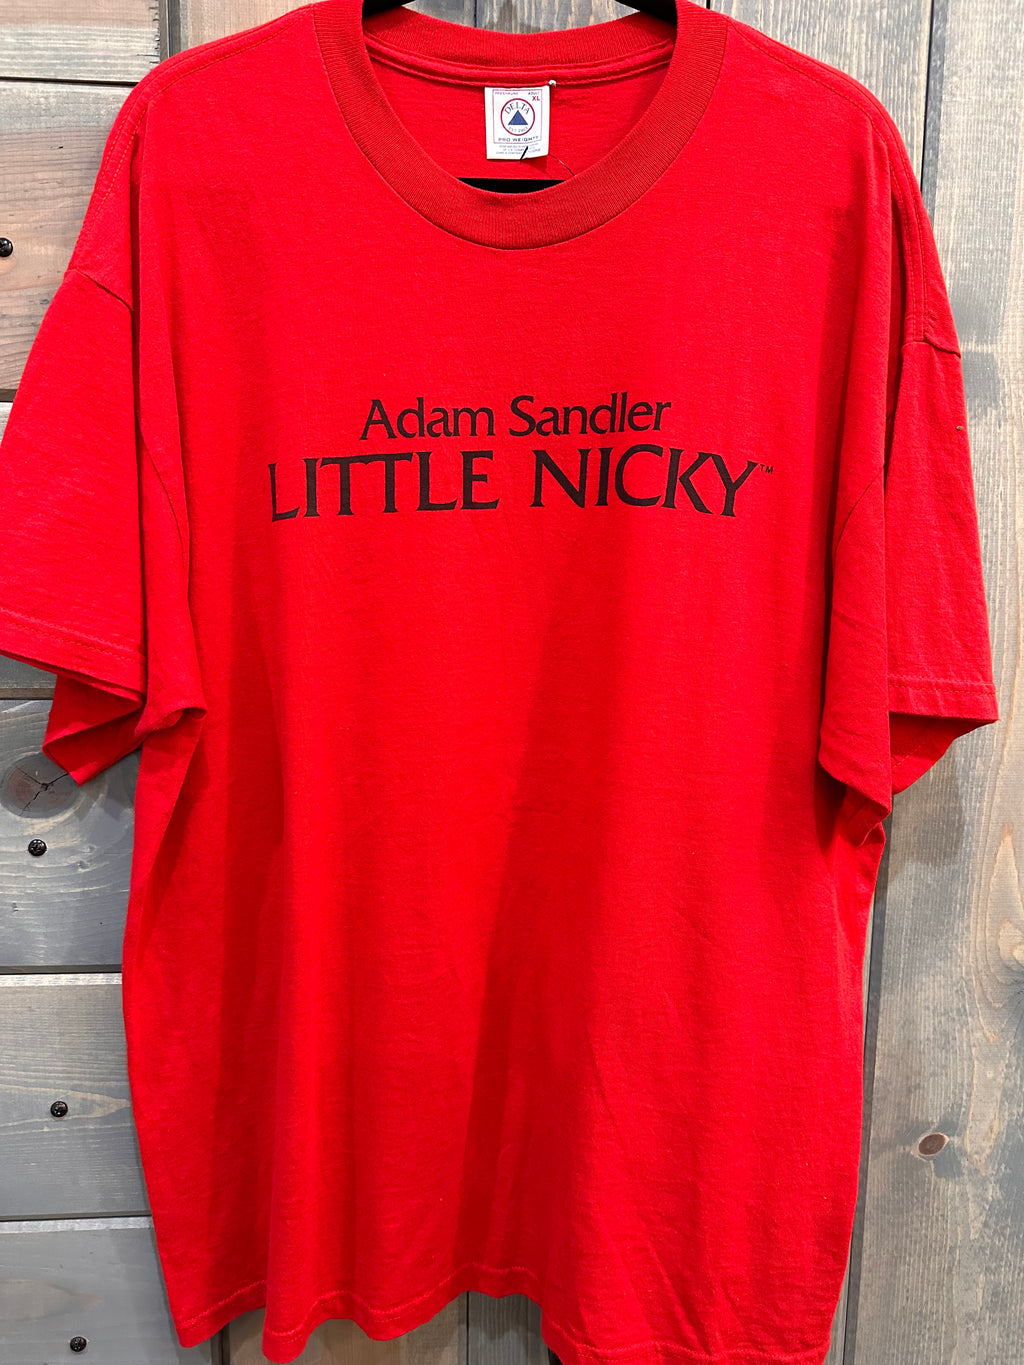 Adam Sandler Little Nicky Tee